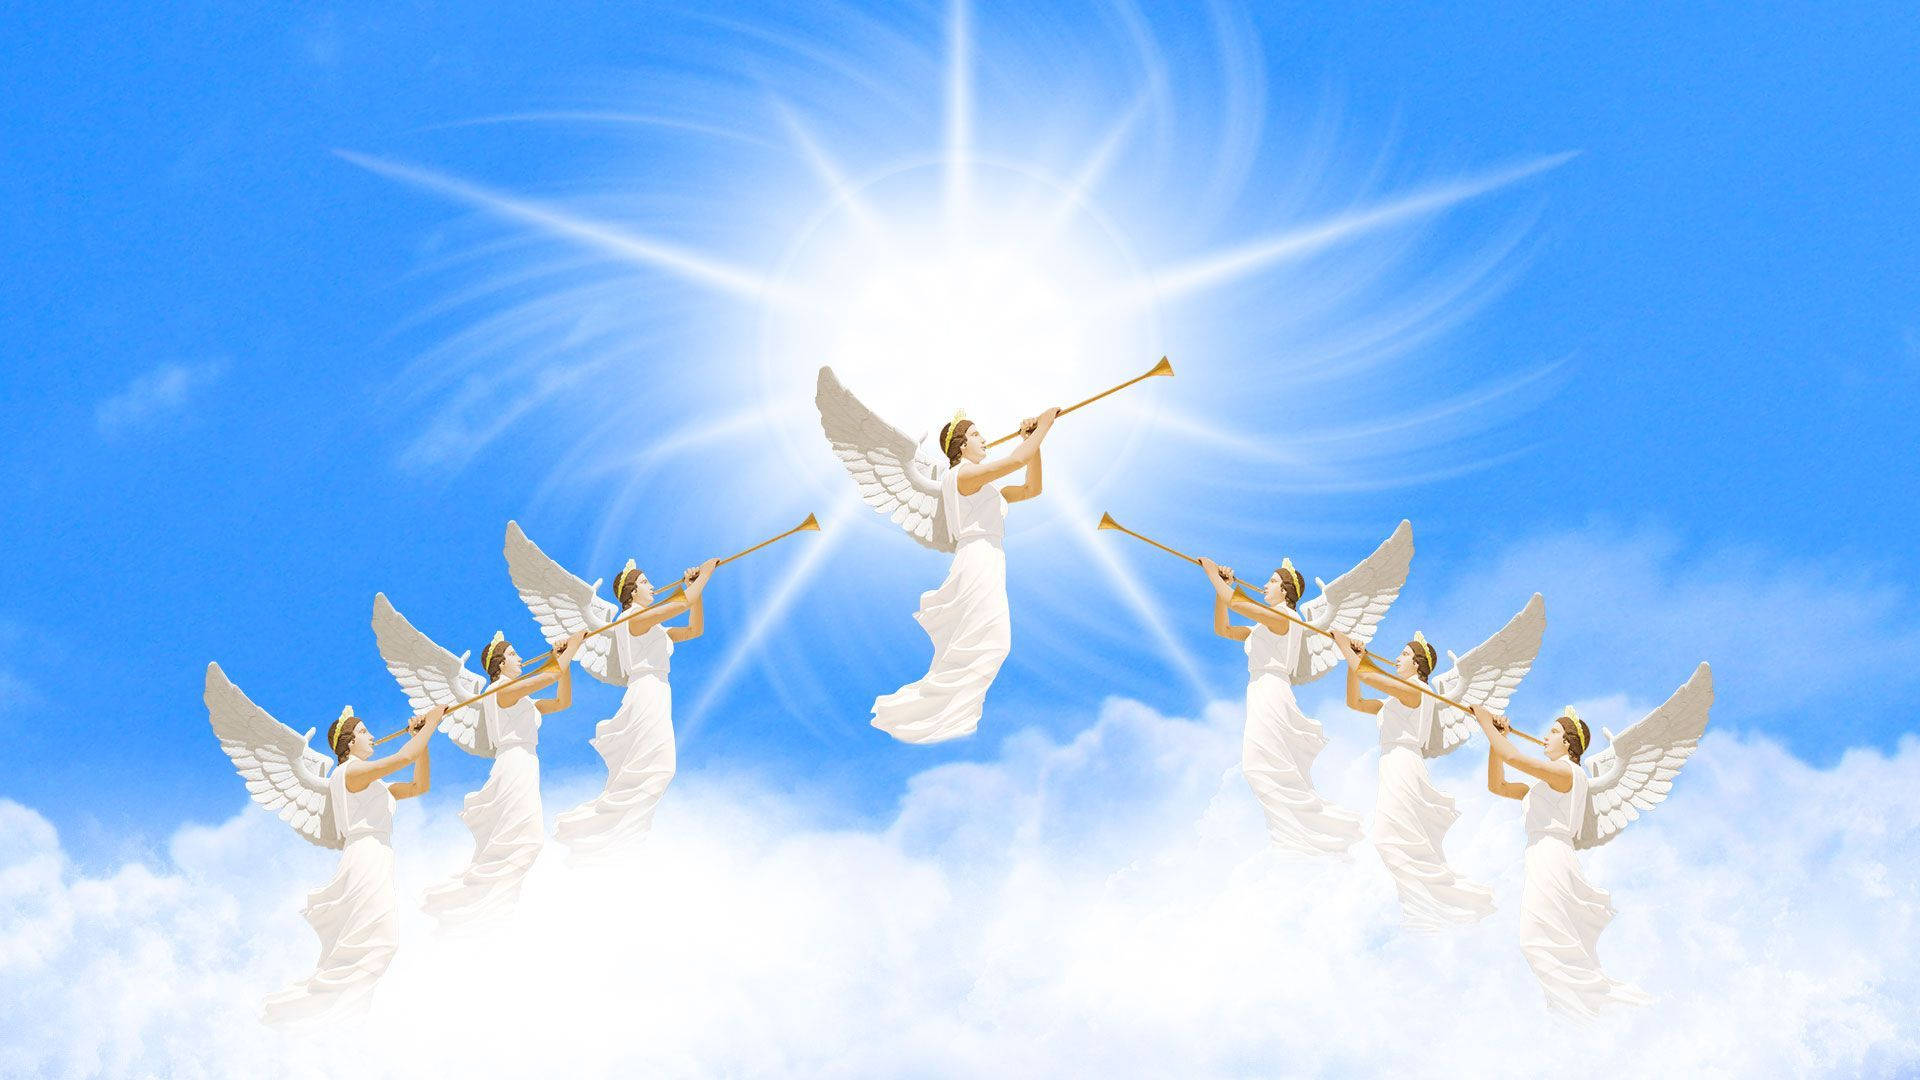 Biblical Angels Trumpets Background